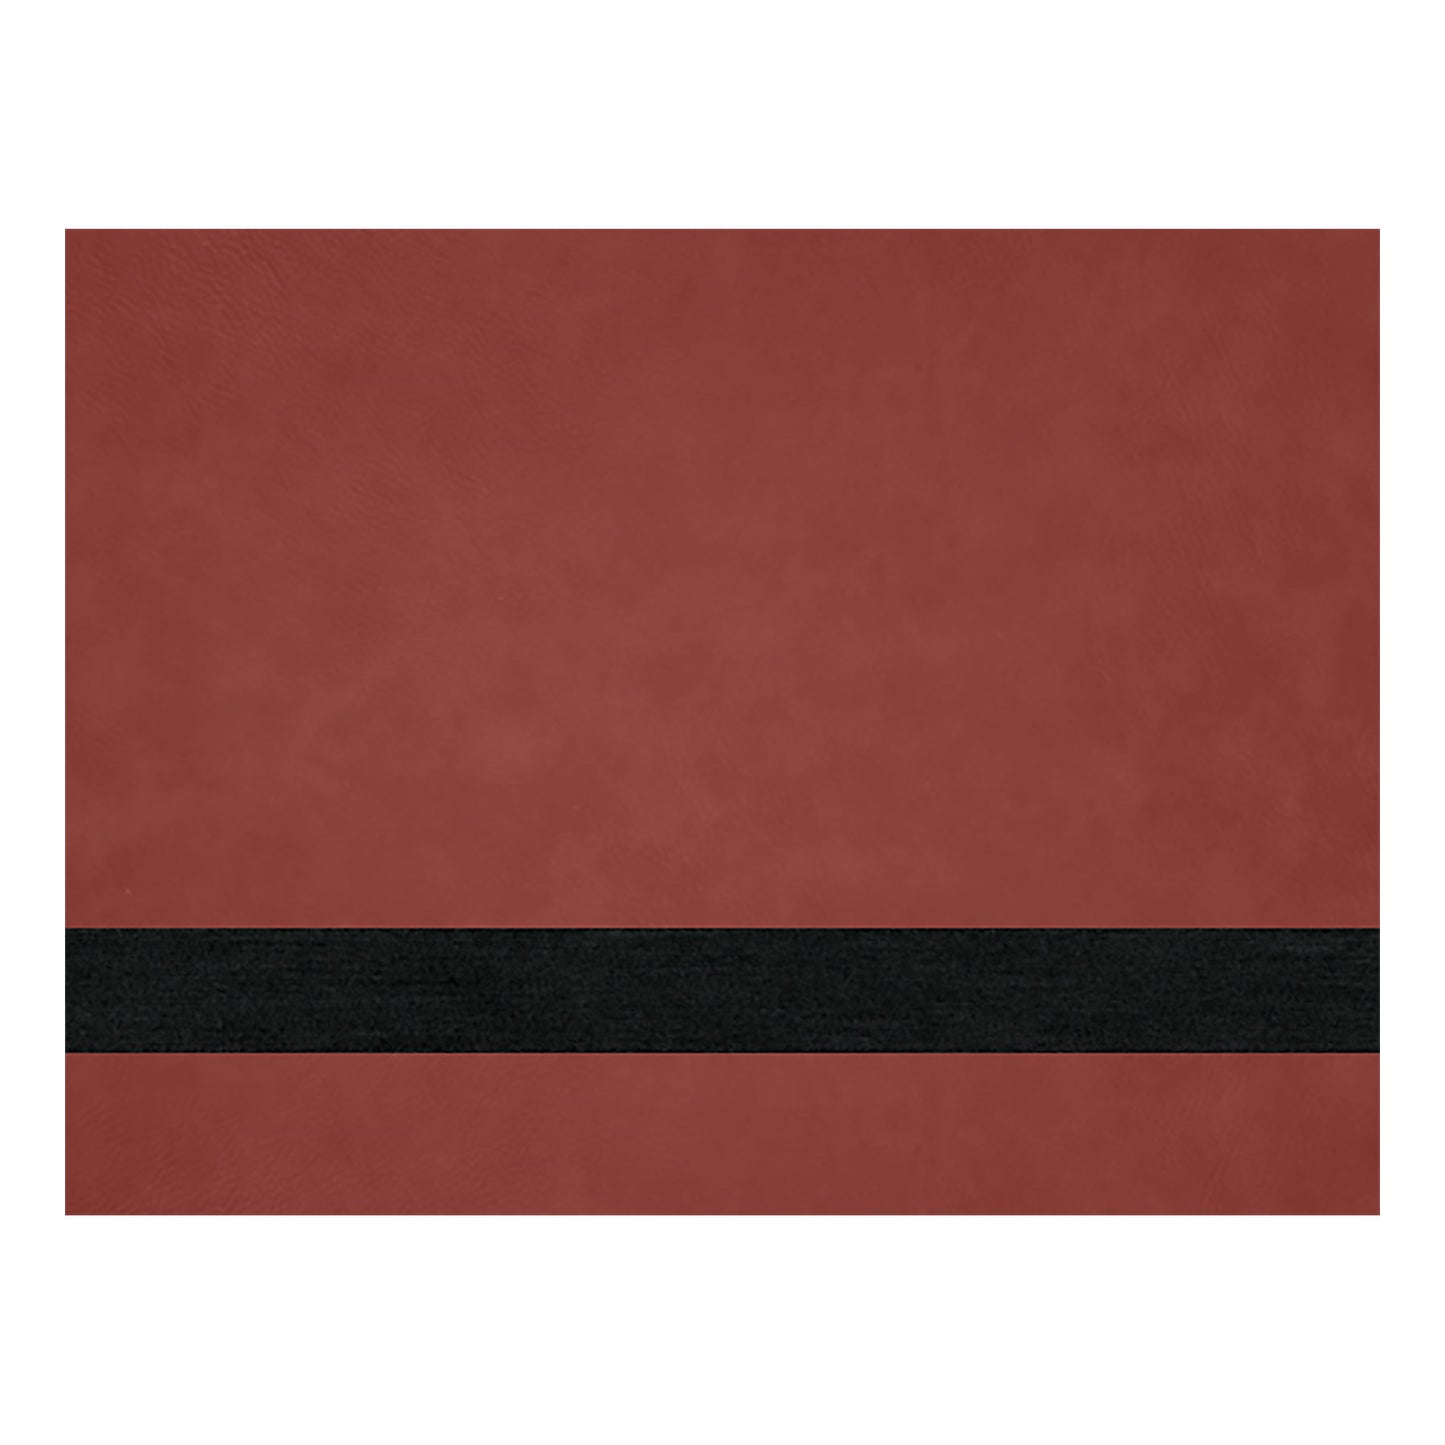 Leatherette Sheets 12 x 24 - Teal/Black – Houston Acrylic